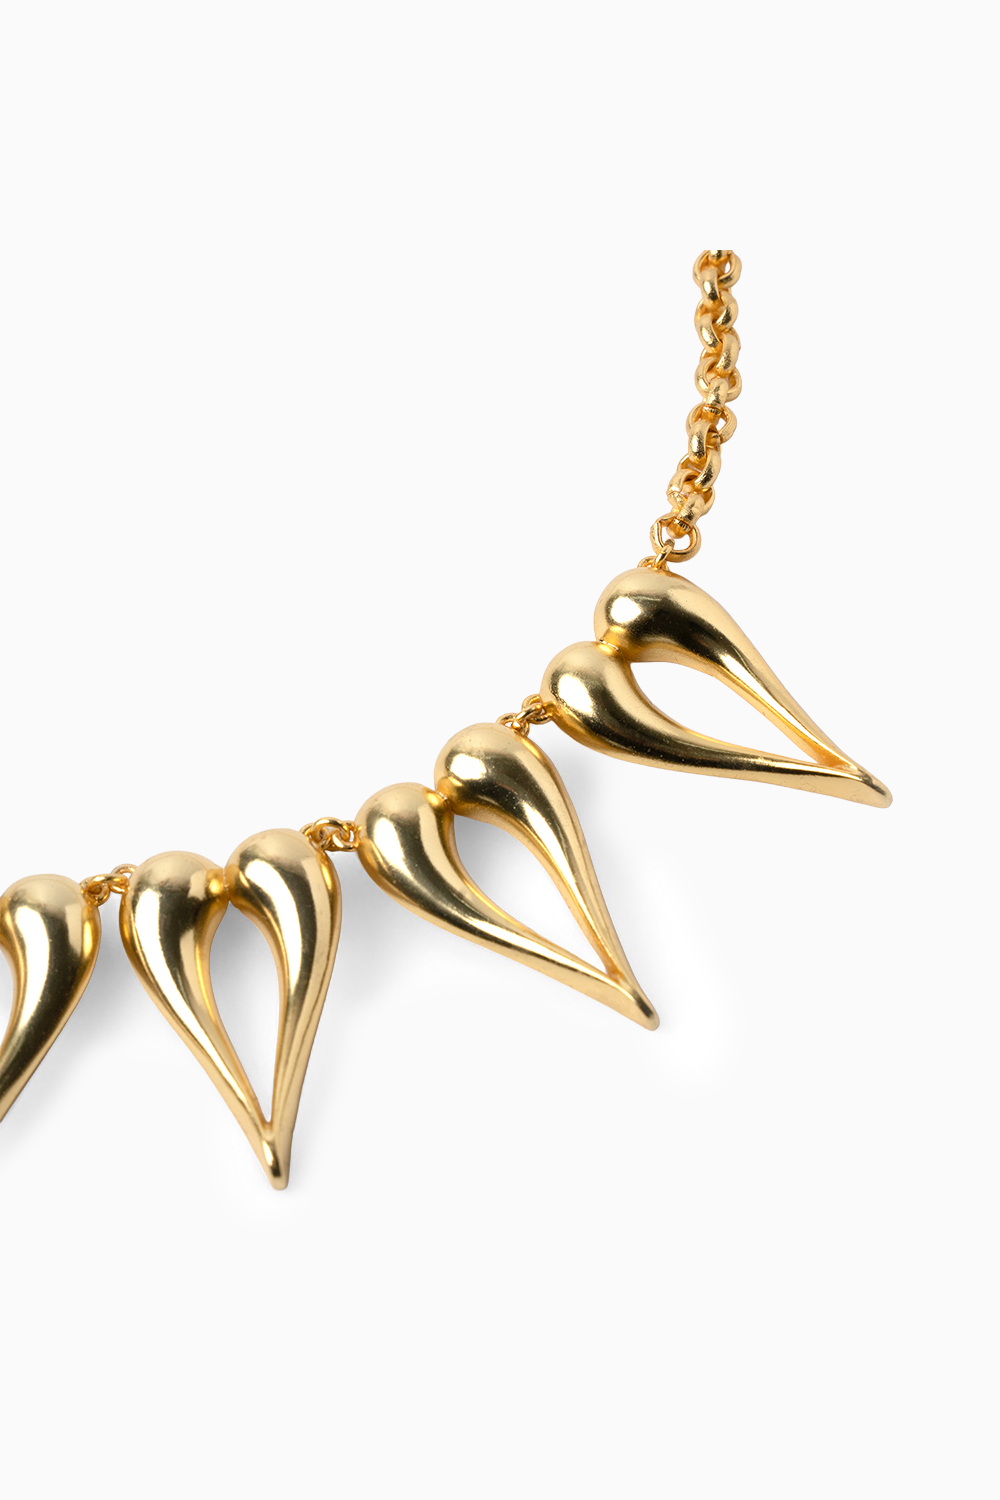 Venus Necklace Gold Tone